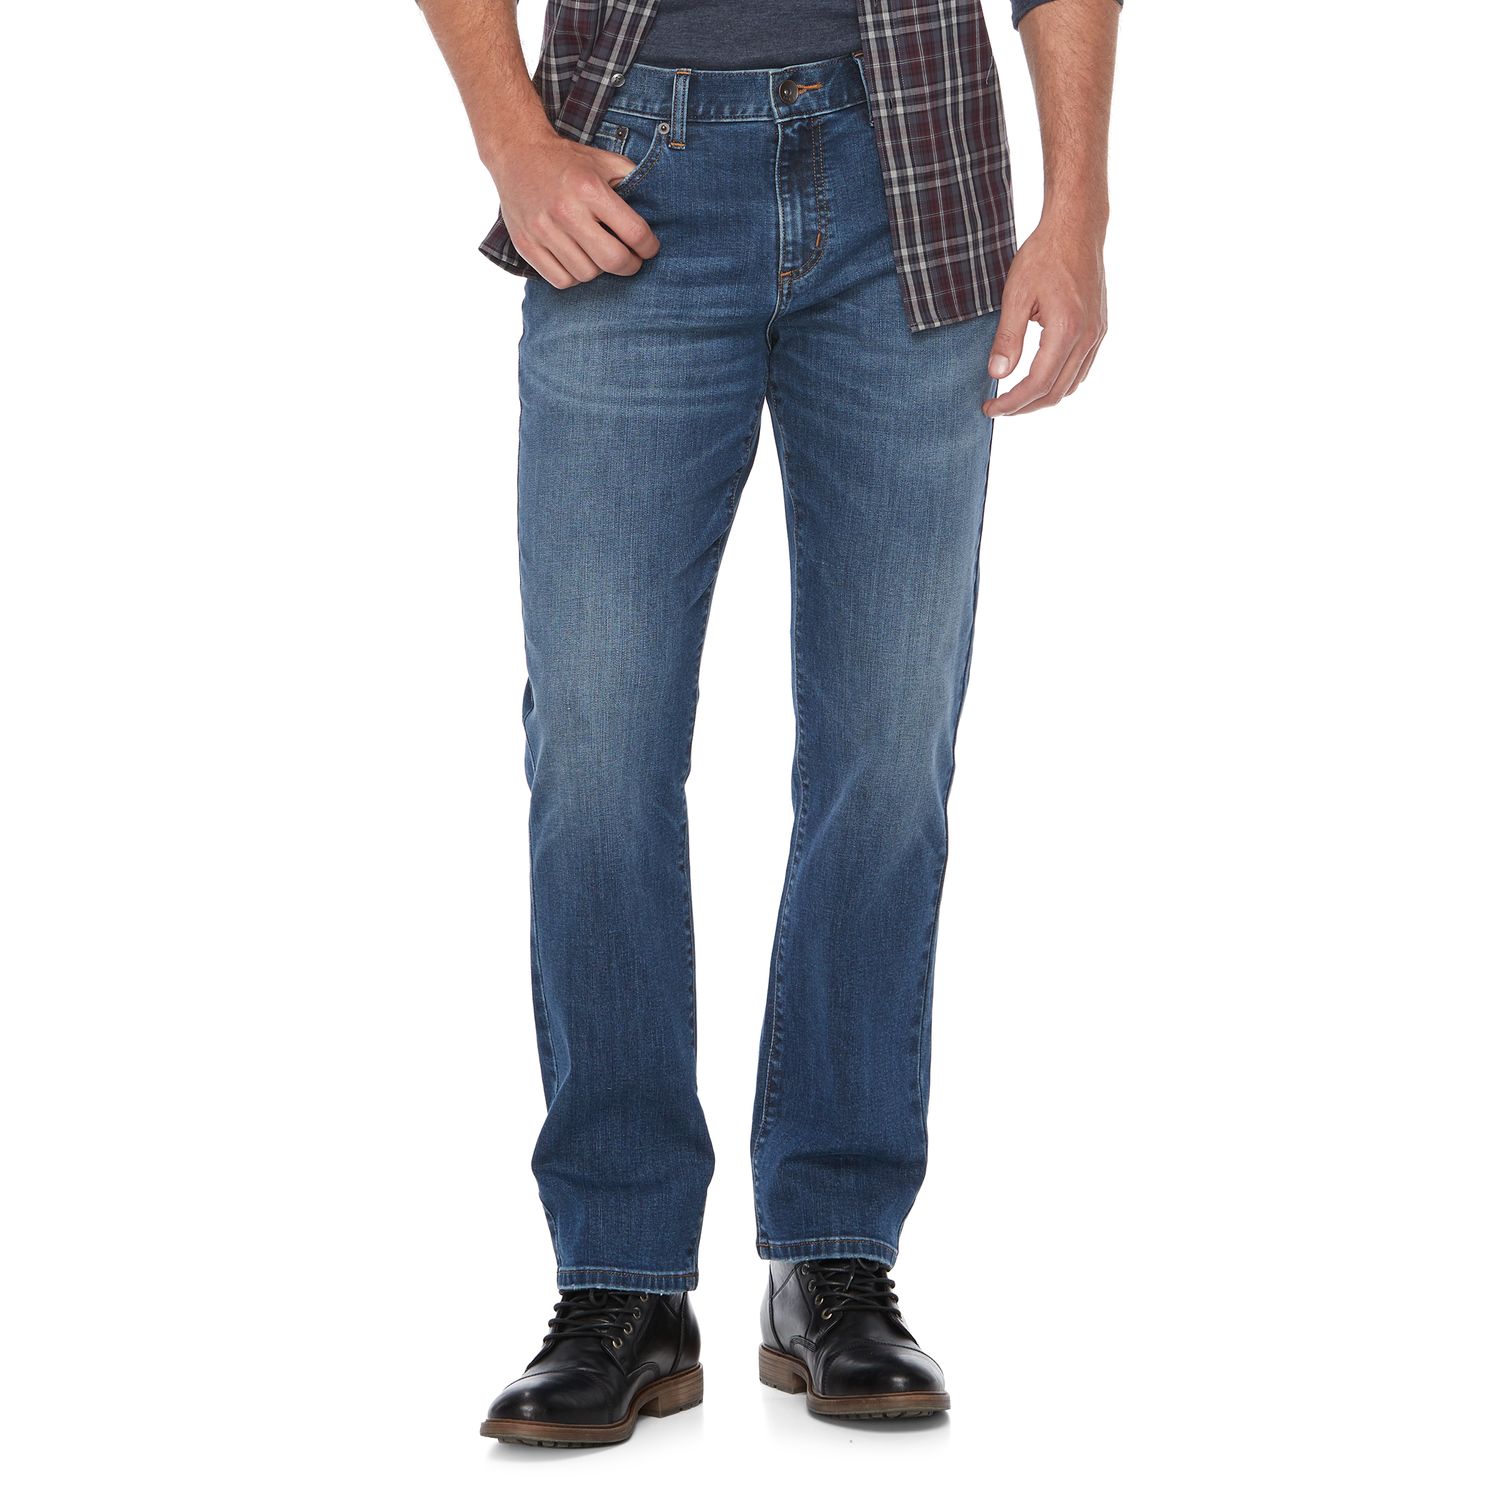 izod men's comfort stretch slim straight fit jeans